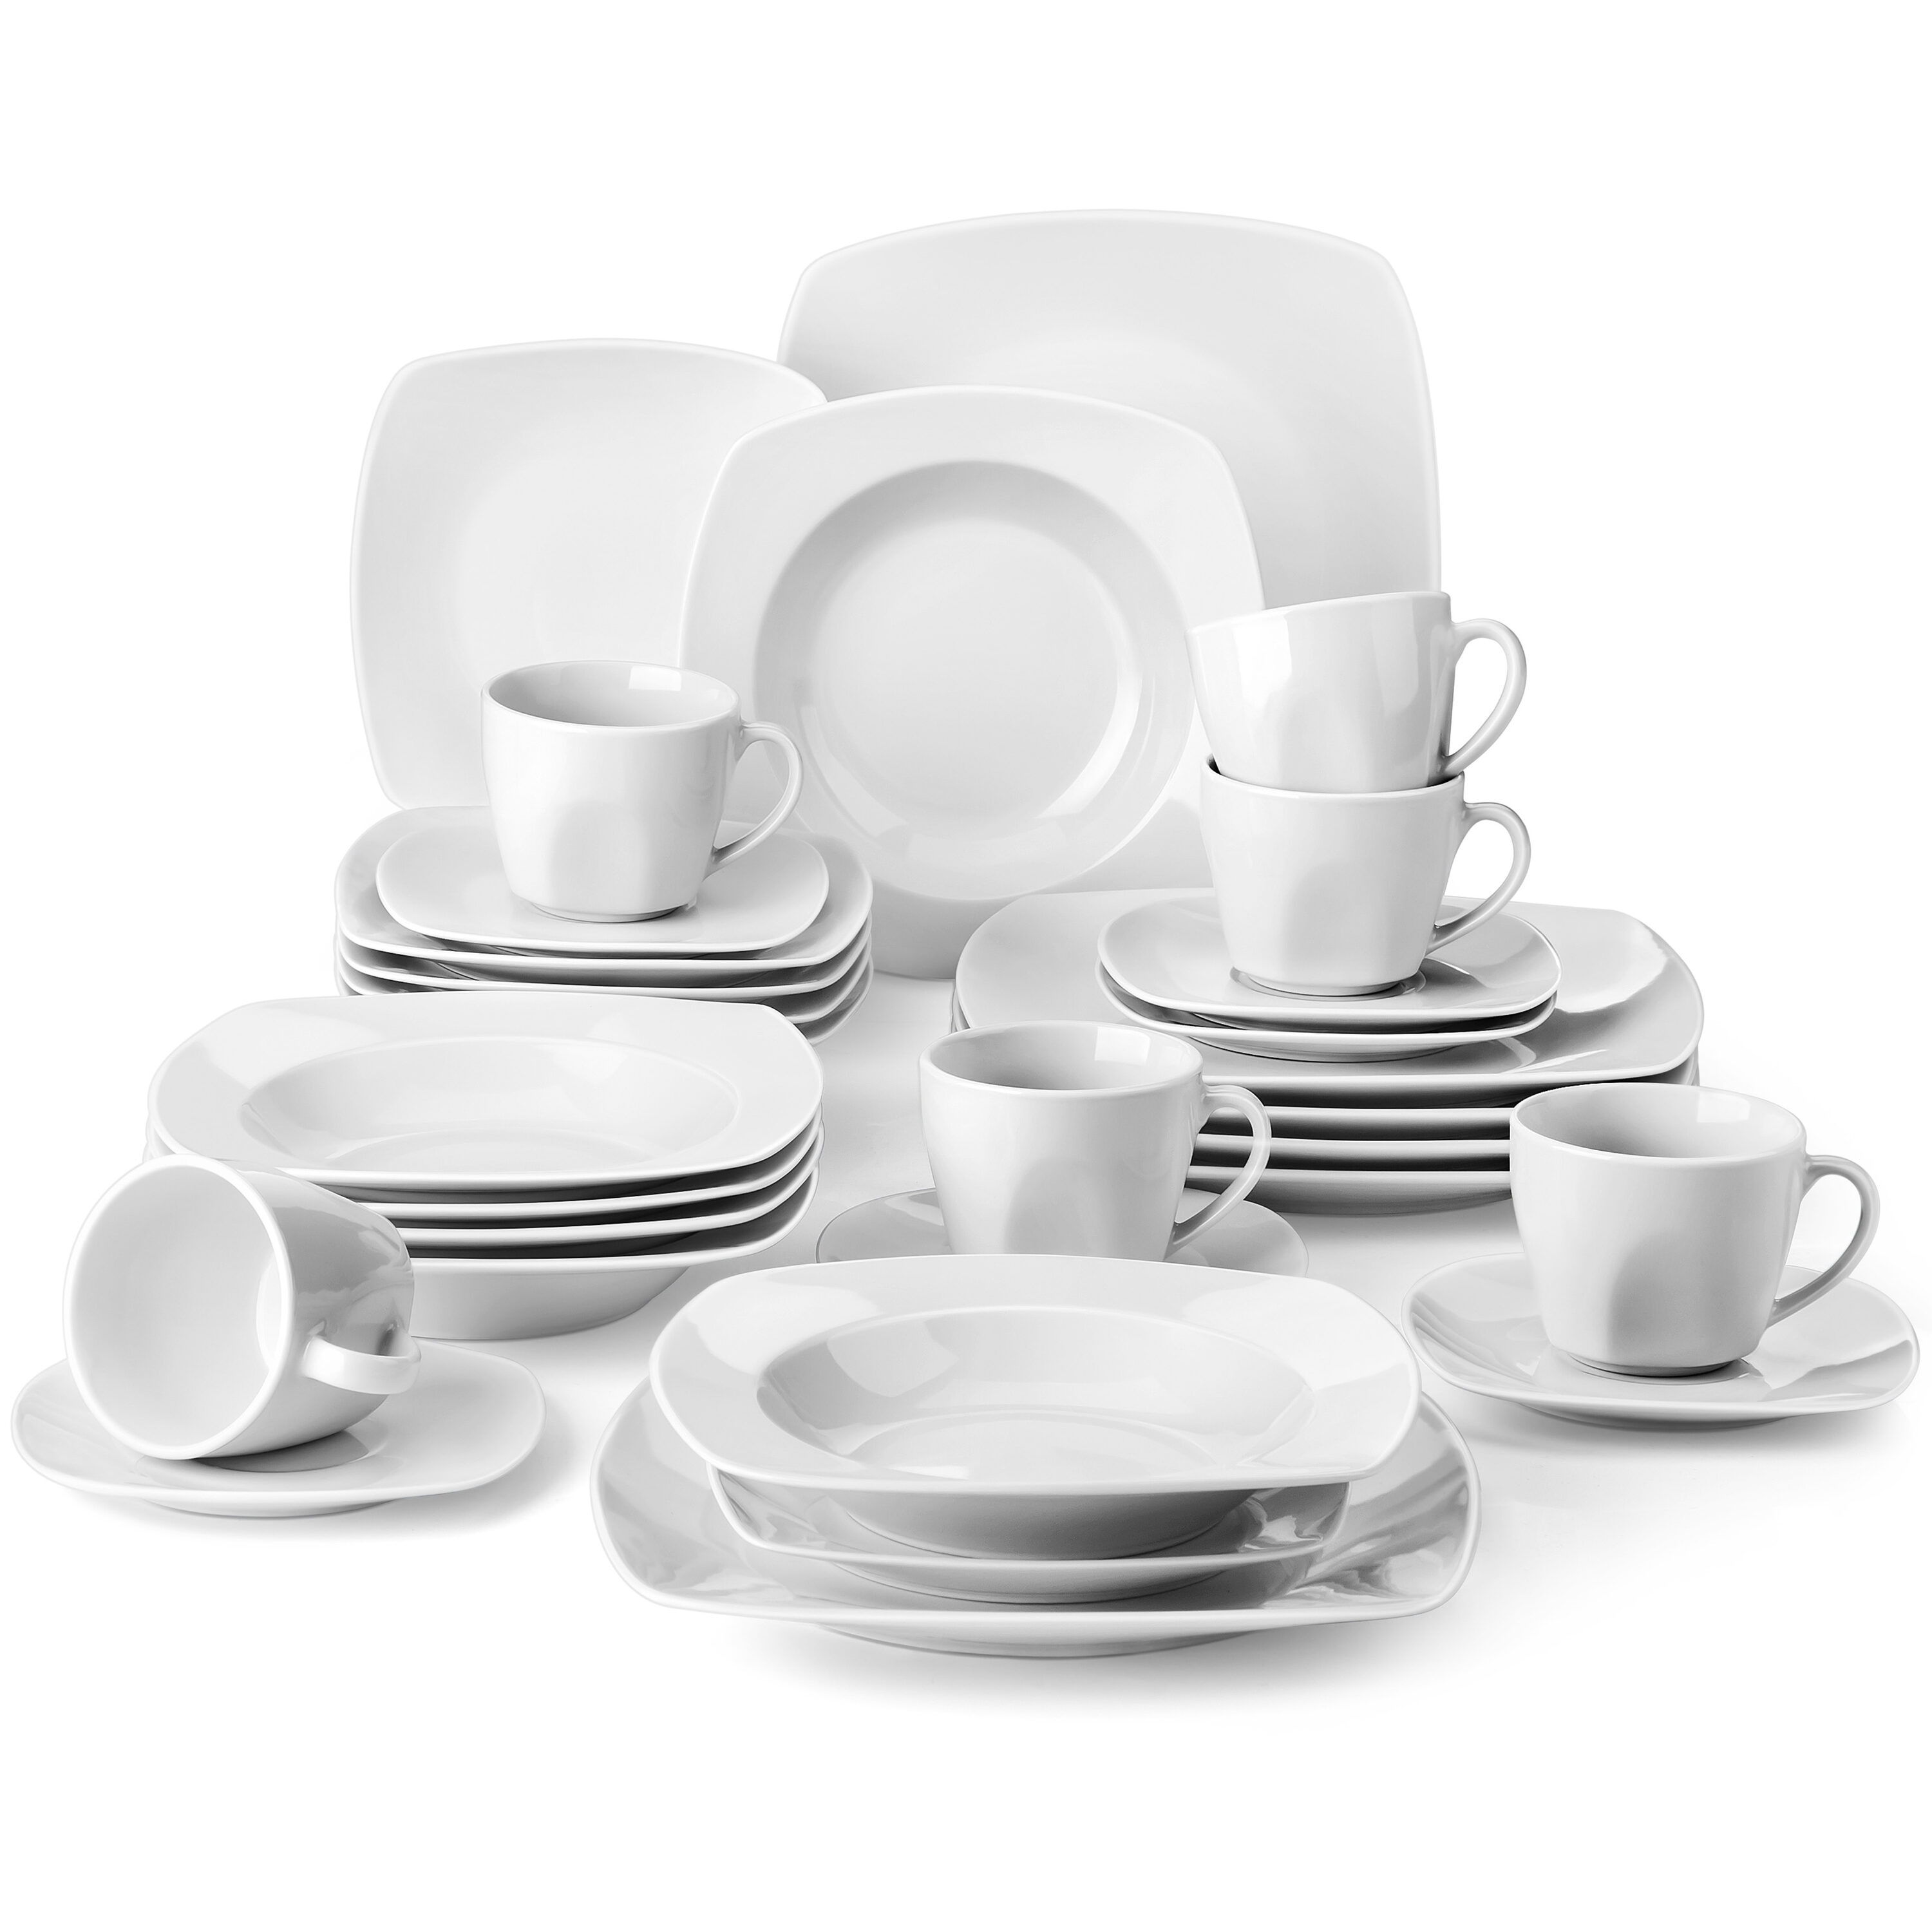 MALACASA Porcelain China Dinnerware Set - Service for 6